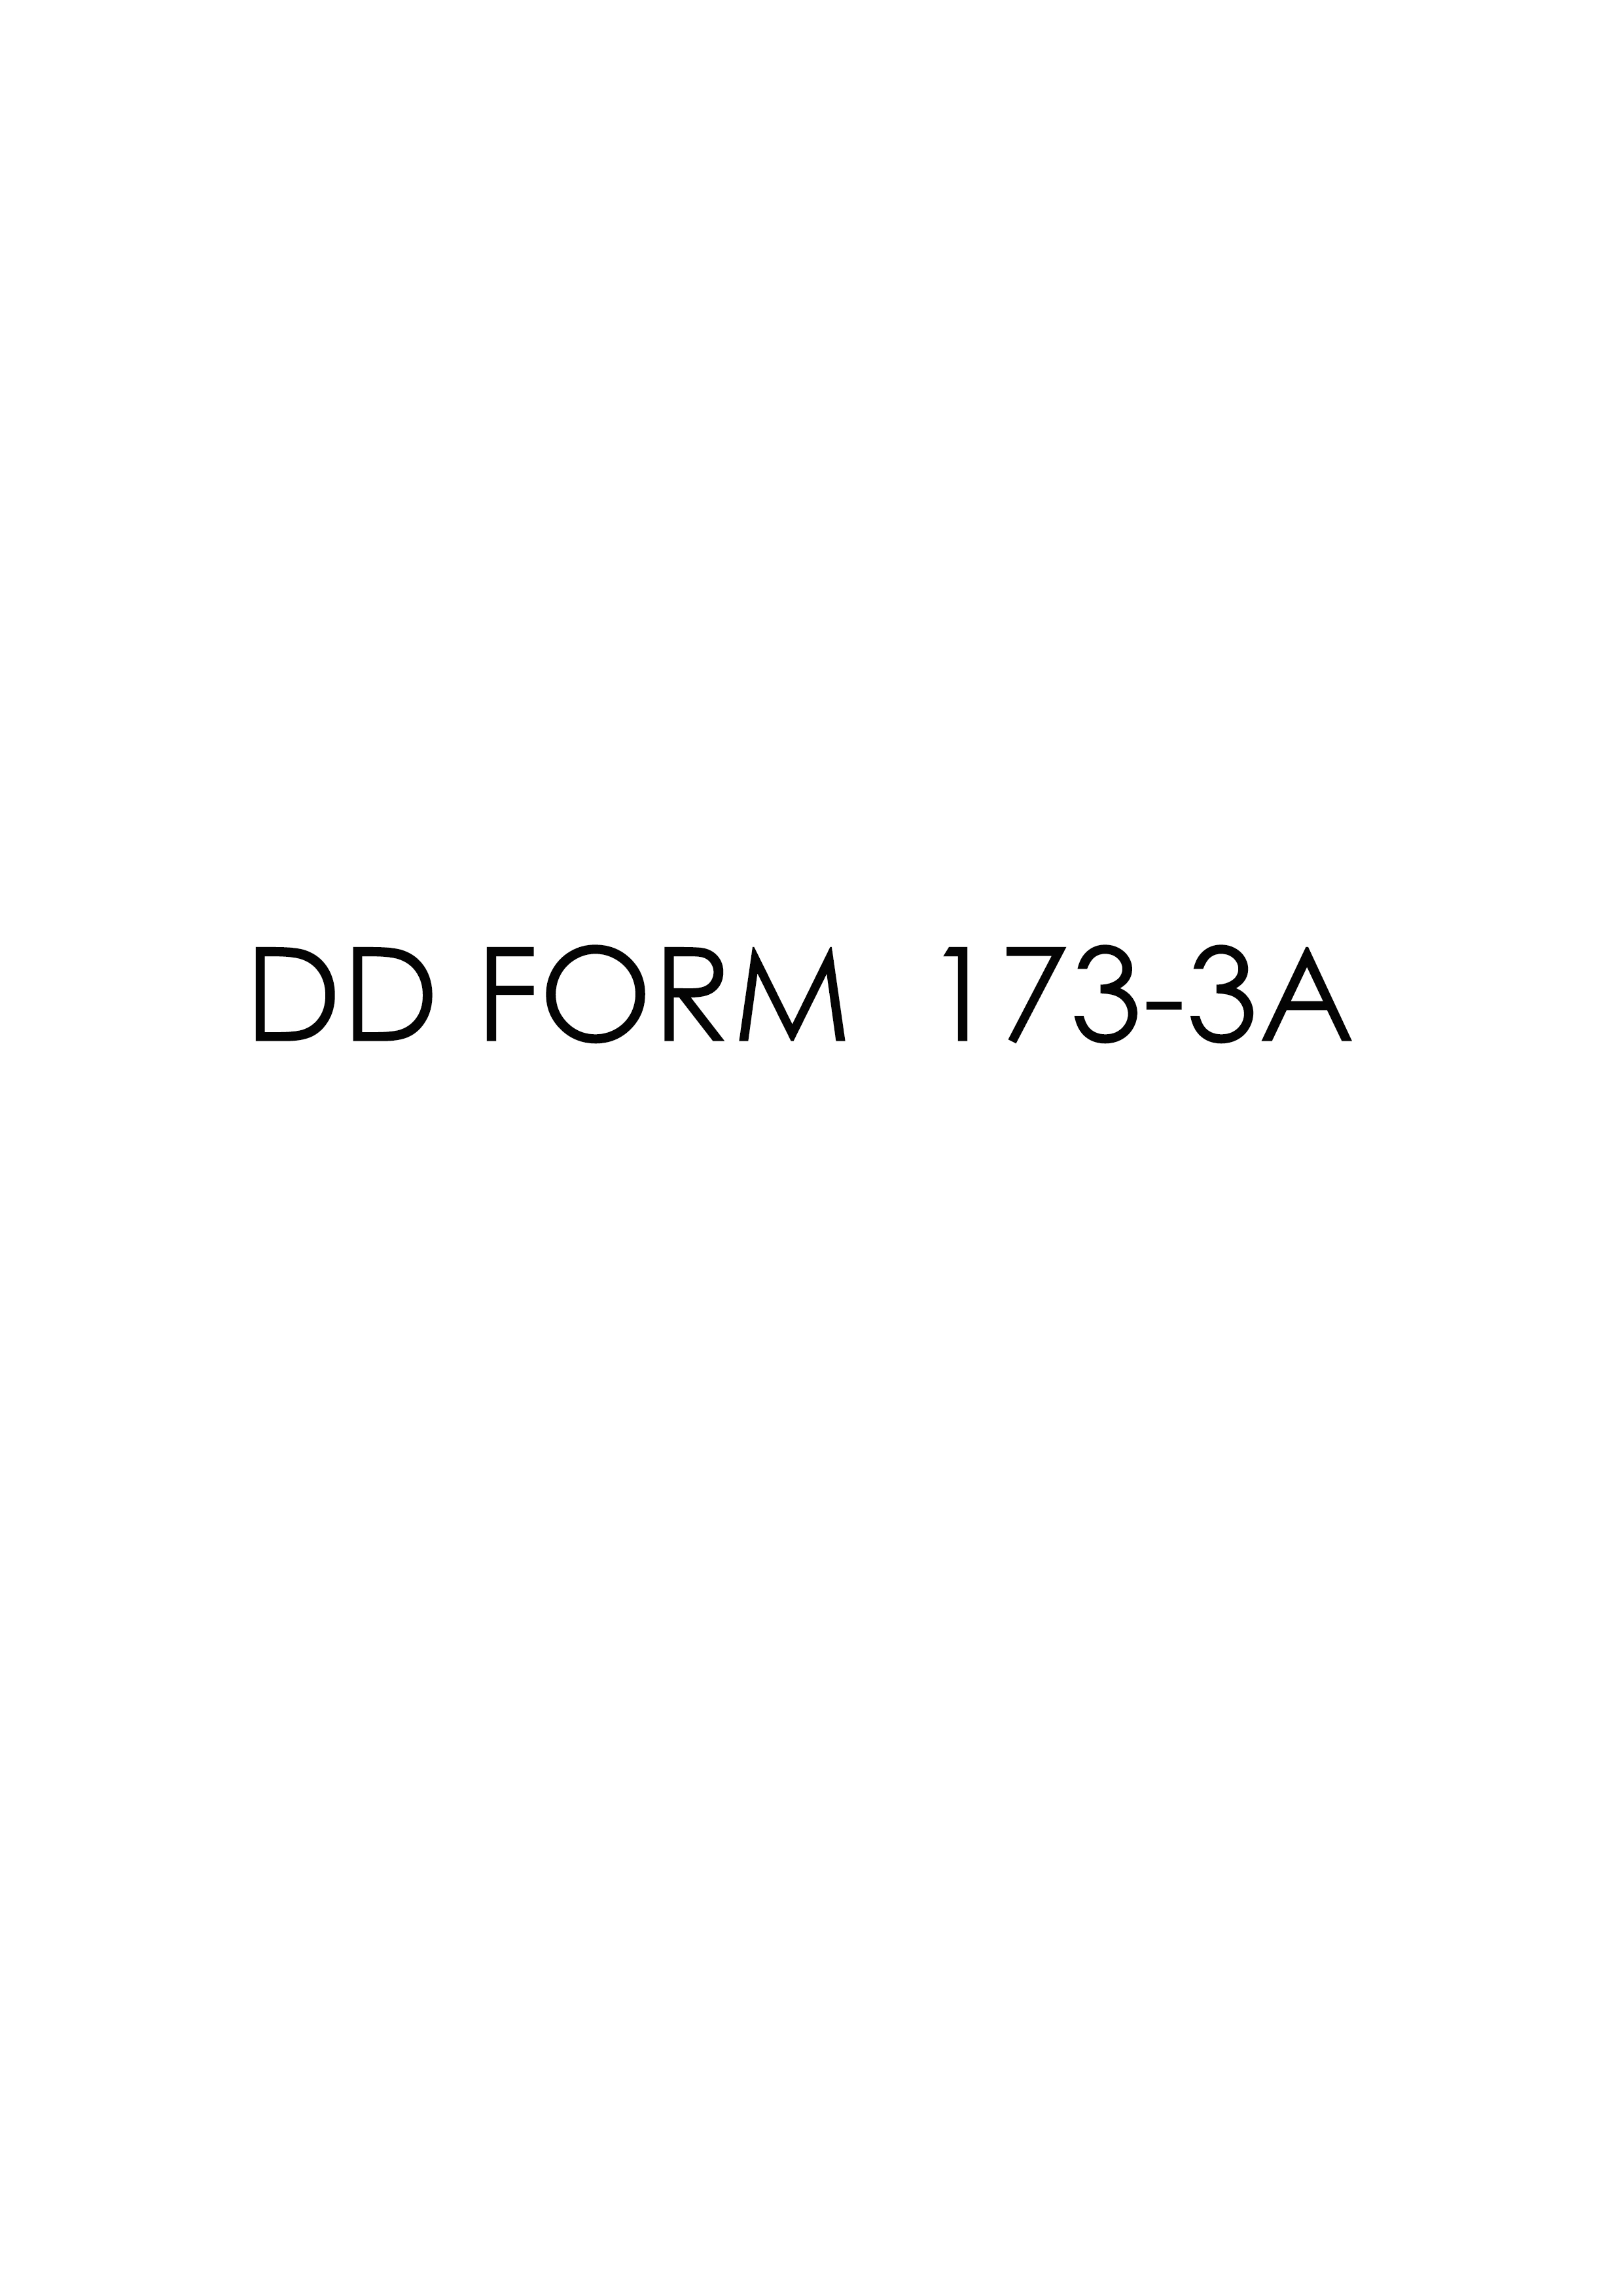 Download dd 173-3A Form